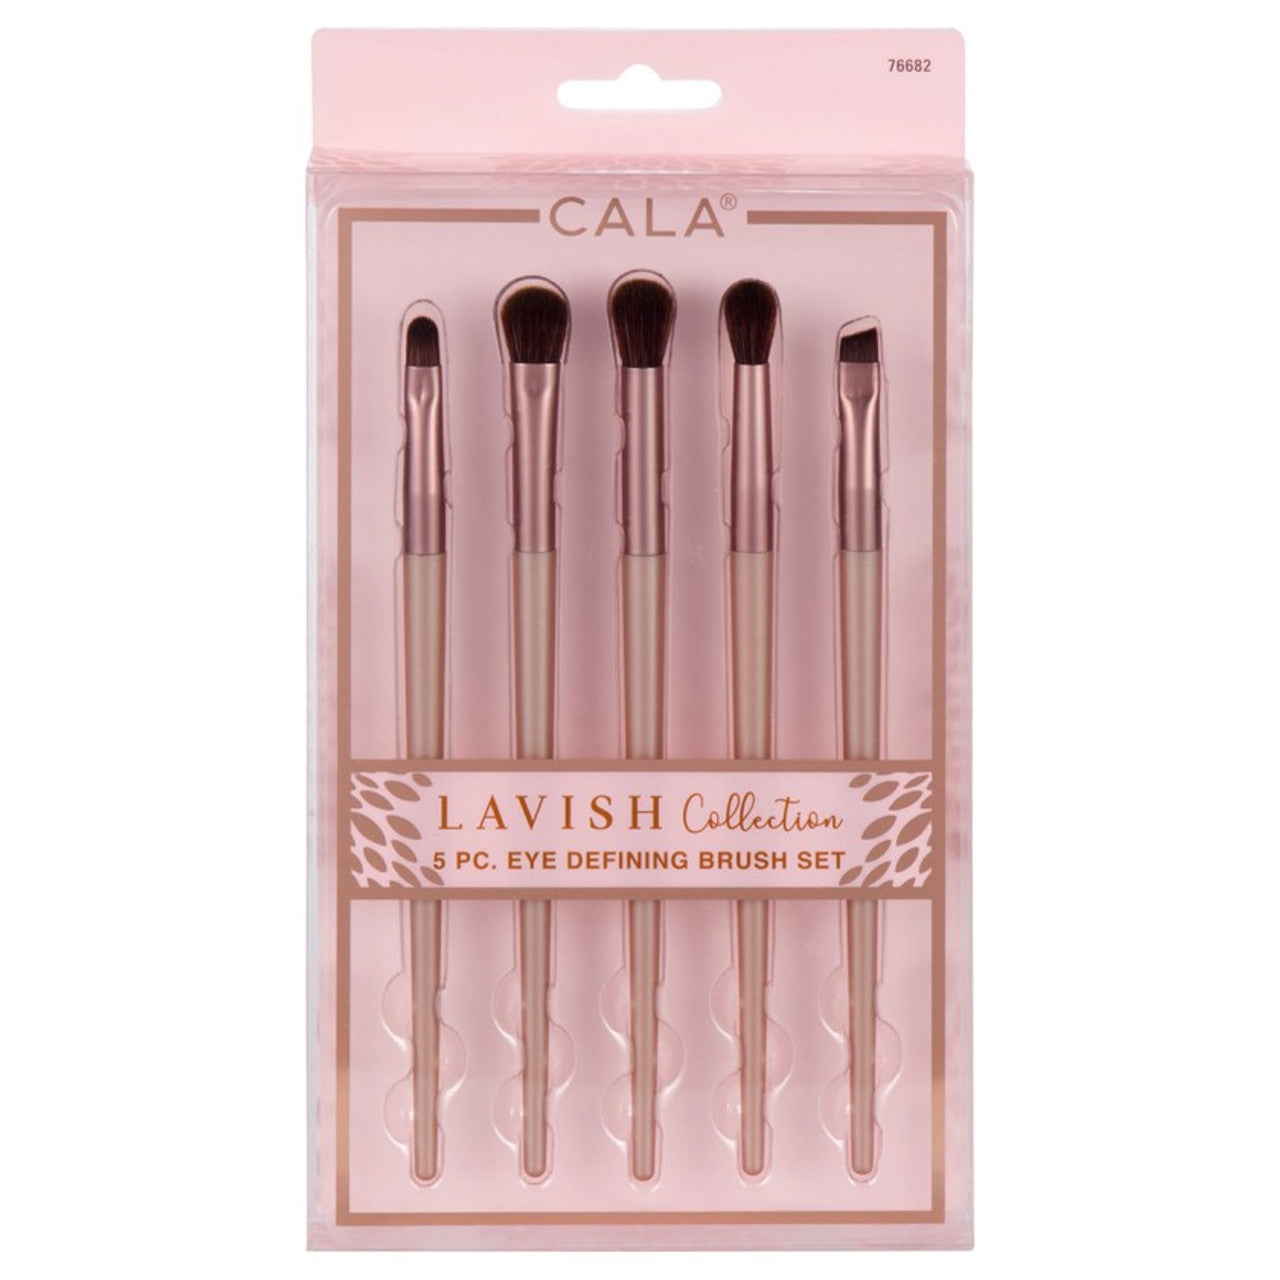 Cala Lavish Collection Eye Defining Brush Set #76682 (PC)